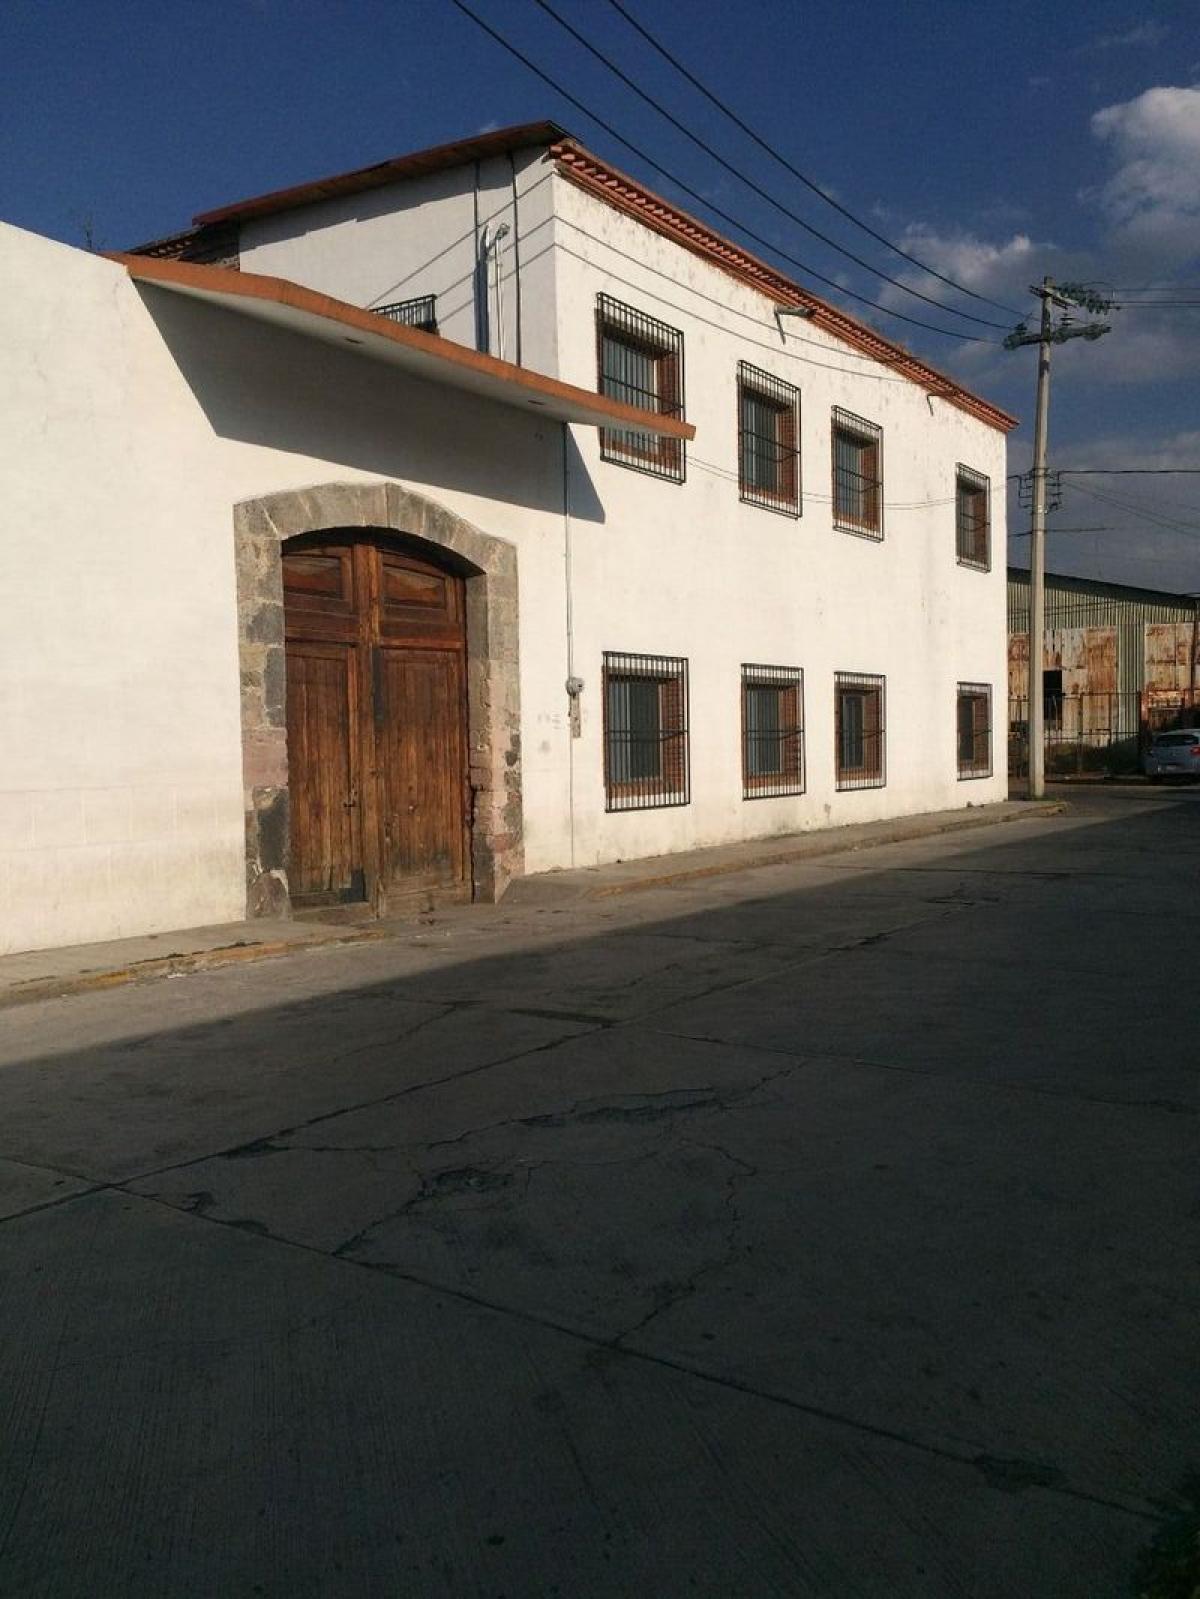 Picture of Apartment Building For Sale in Estado De Mexico, Mexico, Mexico